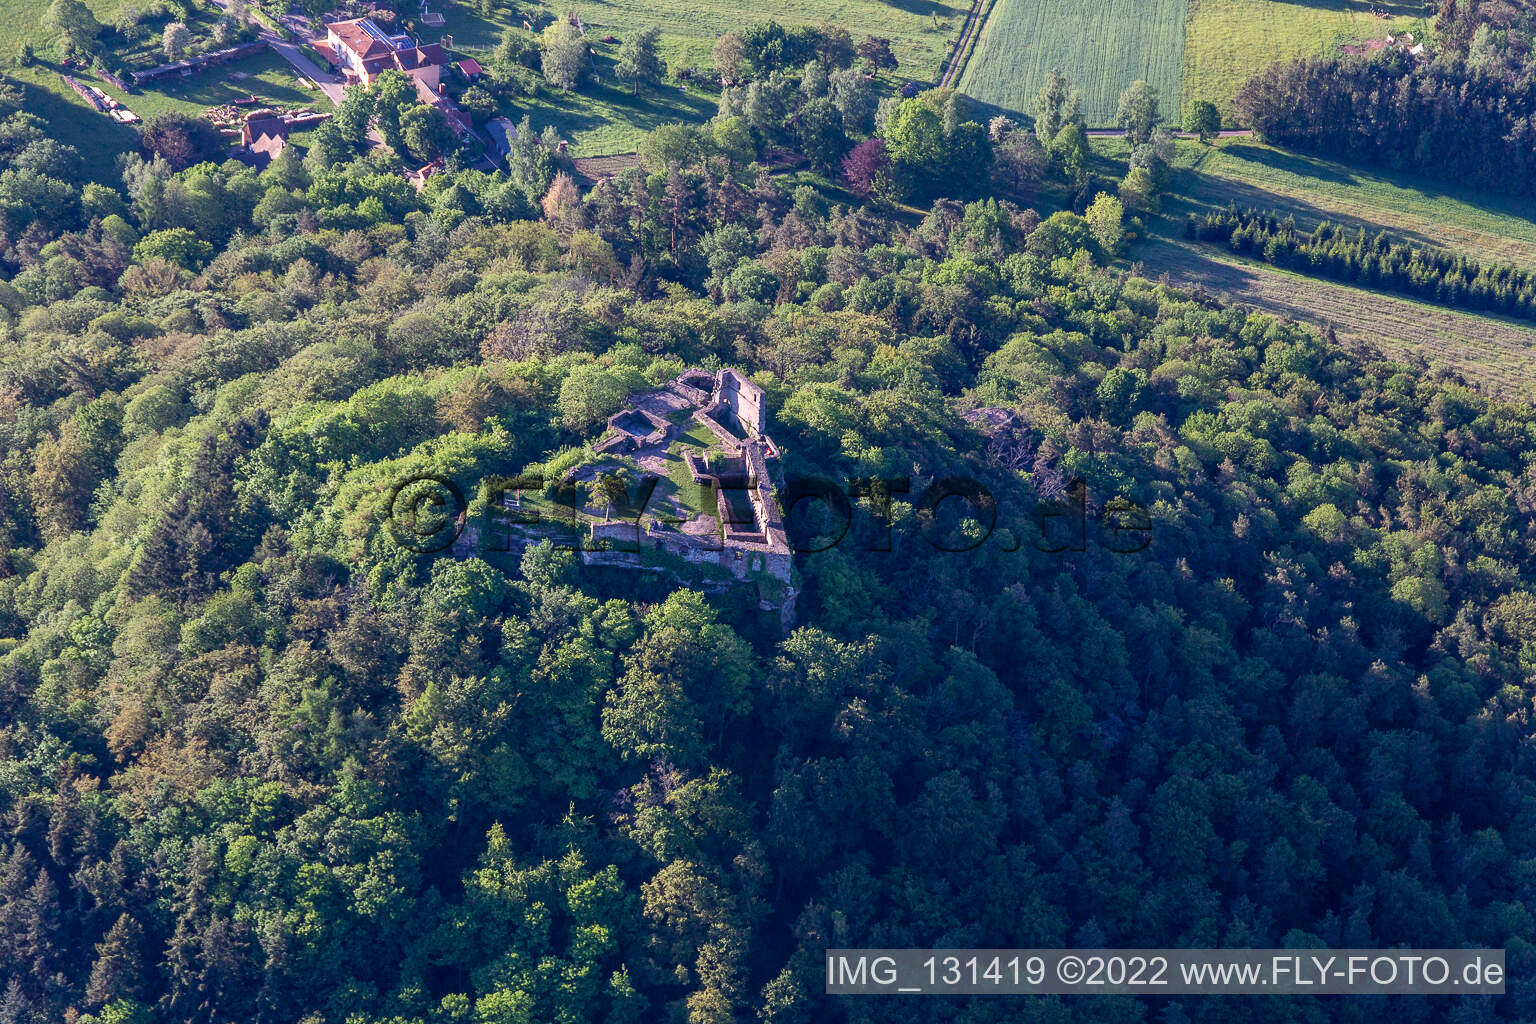 Lindelbrunn castle ruins in Vorderweidenthal in the state Rhineland-Palatinate, Germany